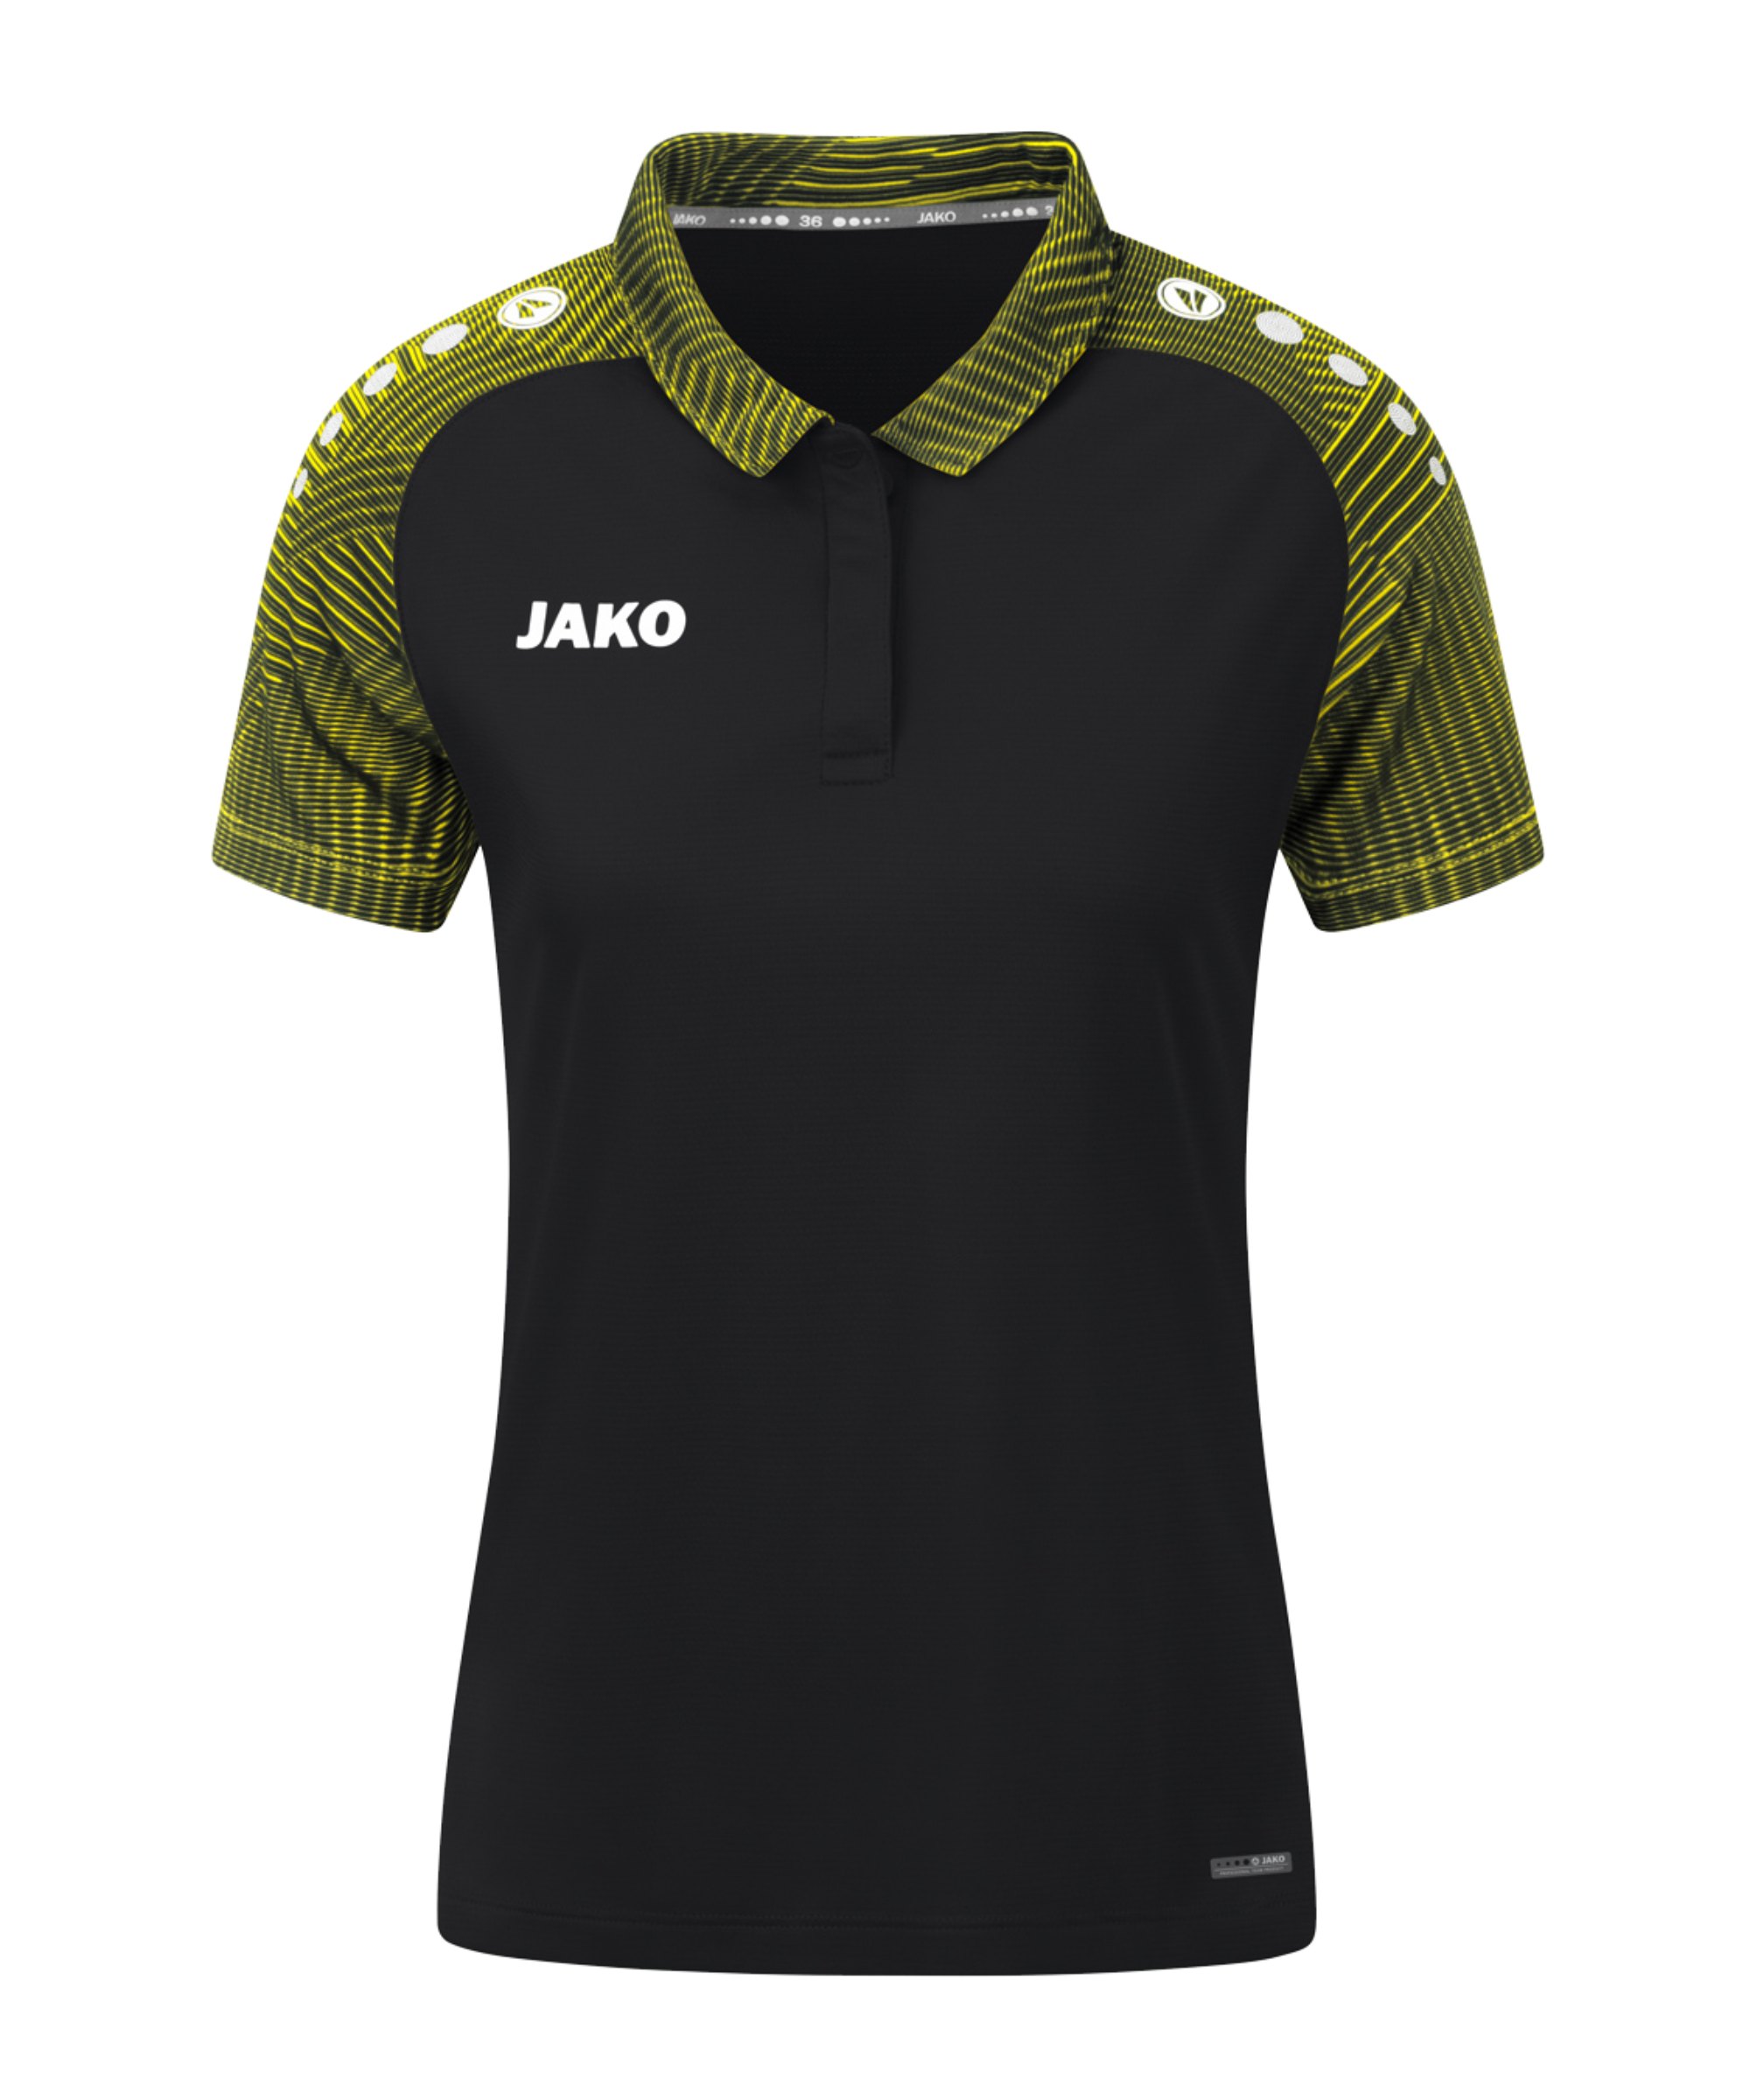 JAKO Performance Poloshirt Damen Schwarz Gelb F808 - schwarz